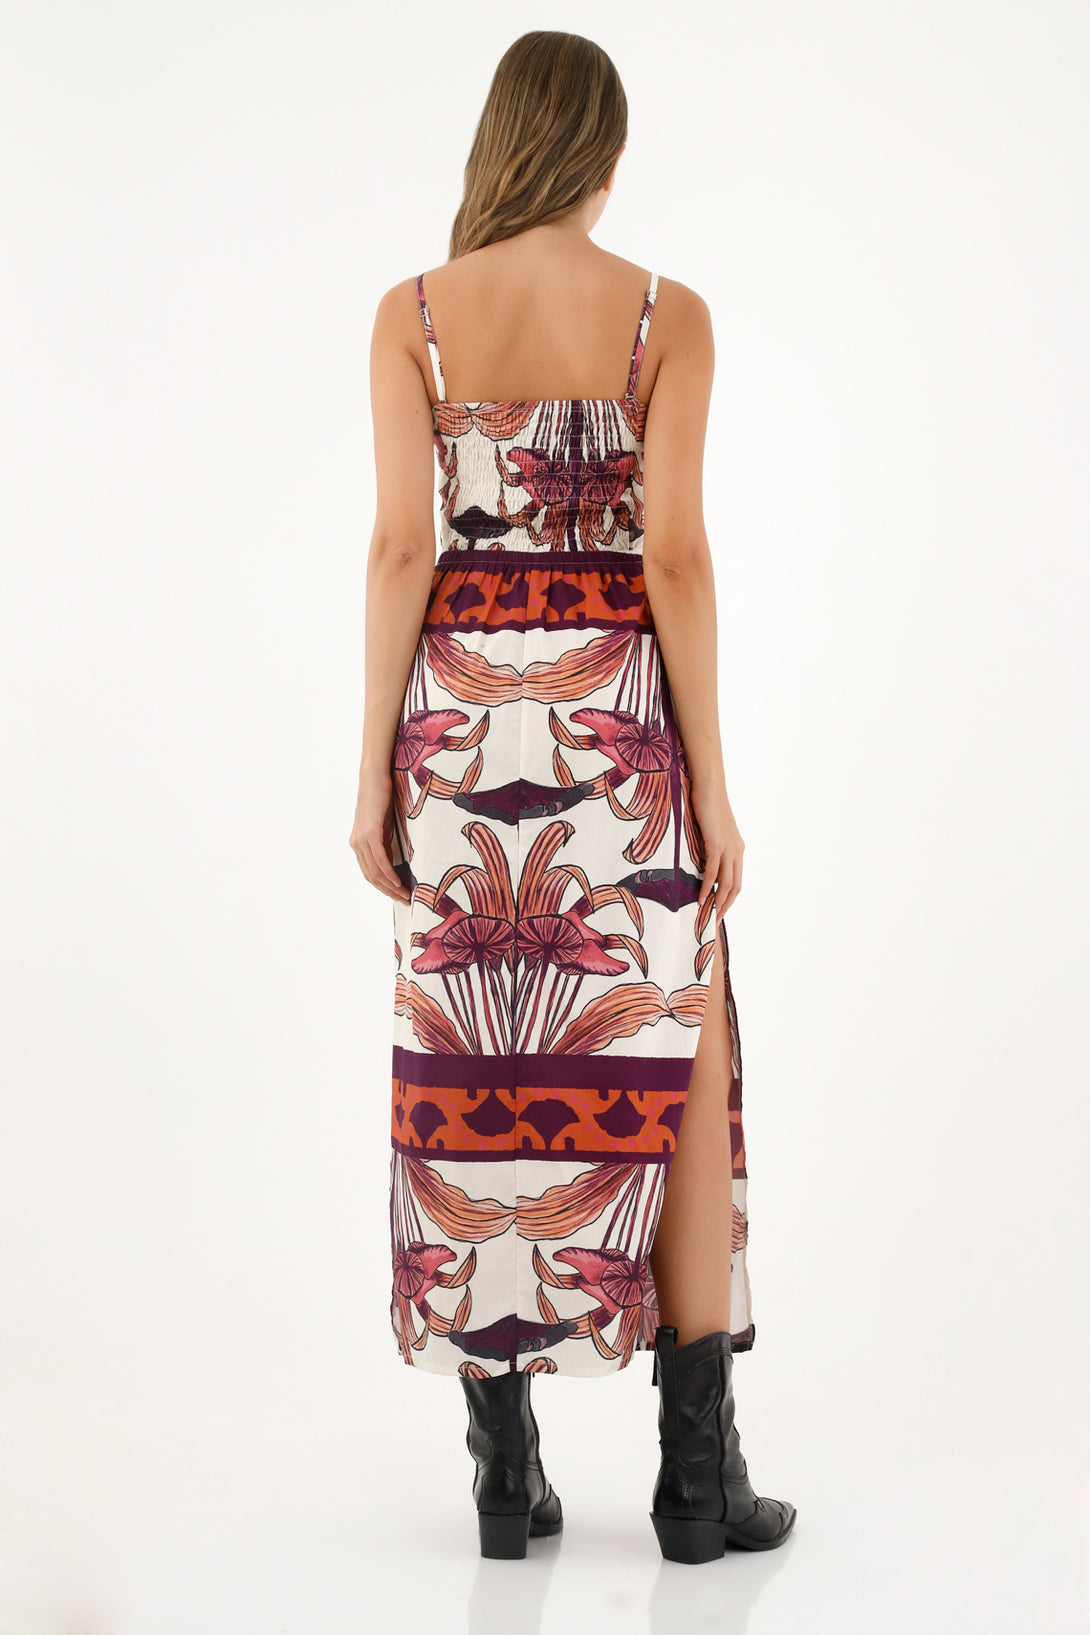 Tns dress for women, long dresses printed with mushroom borders